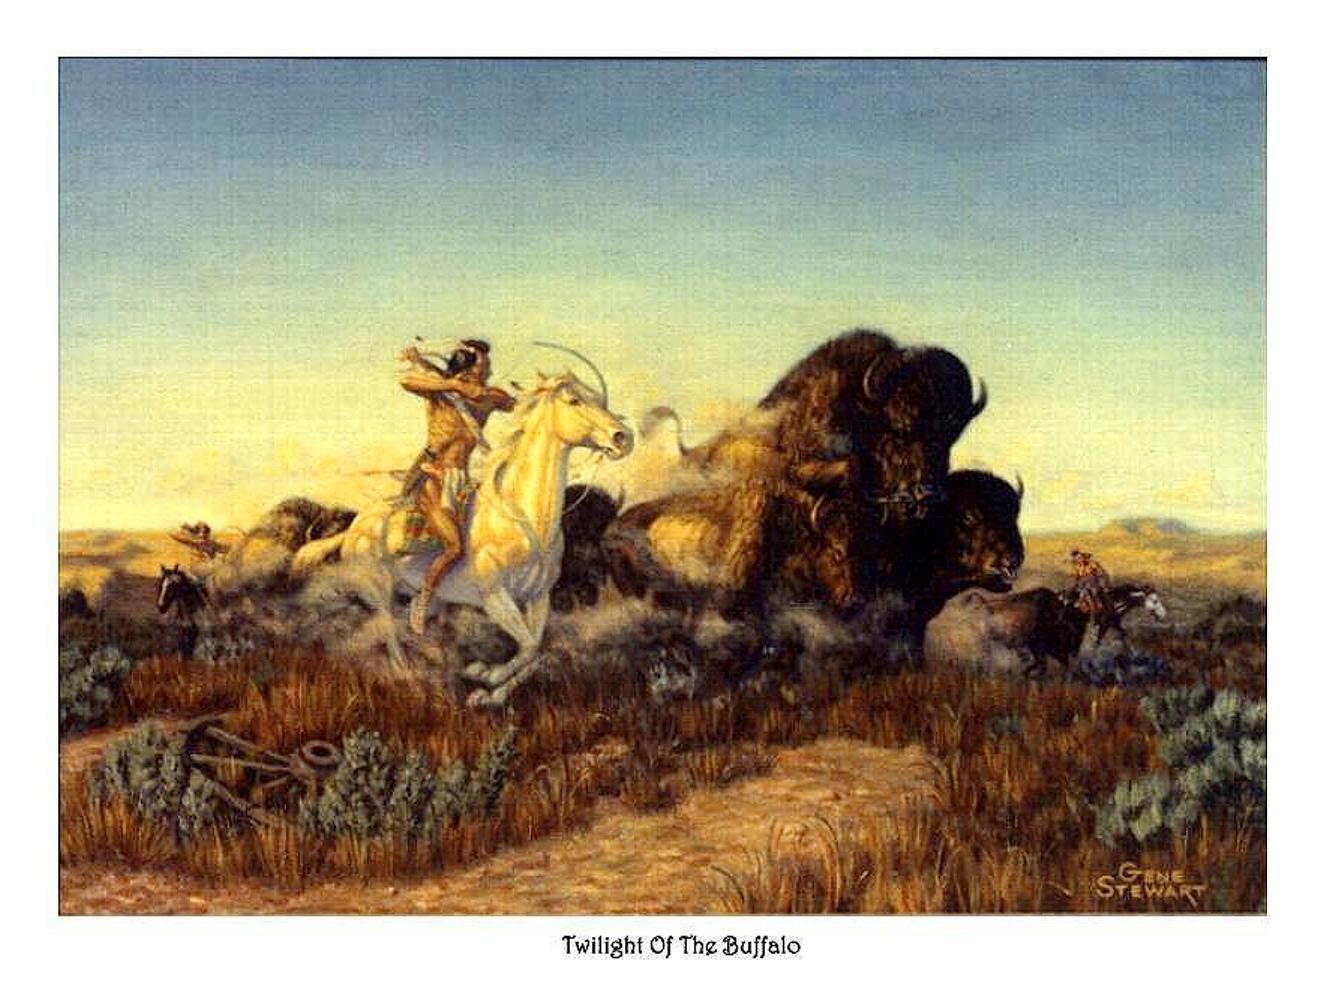 Twilight of The Buffalo, print